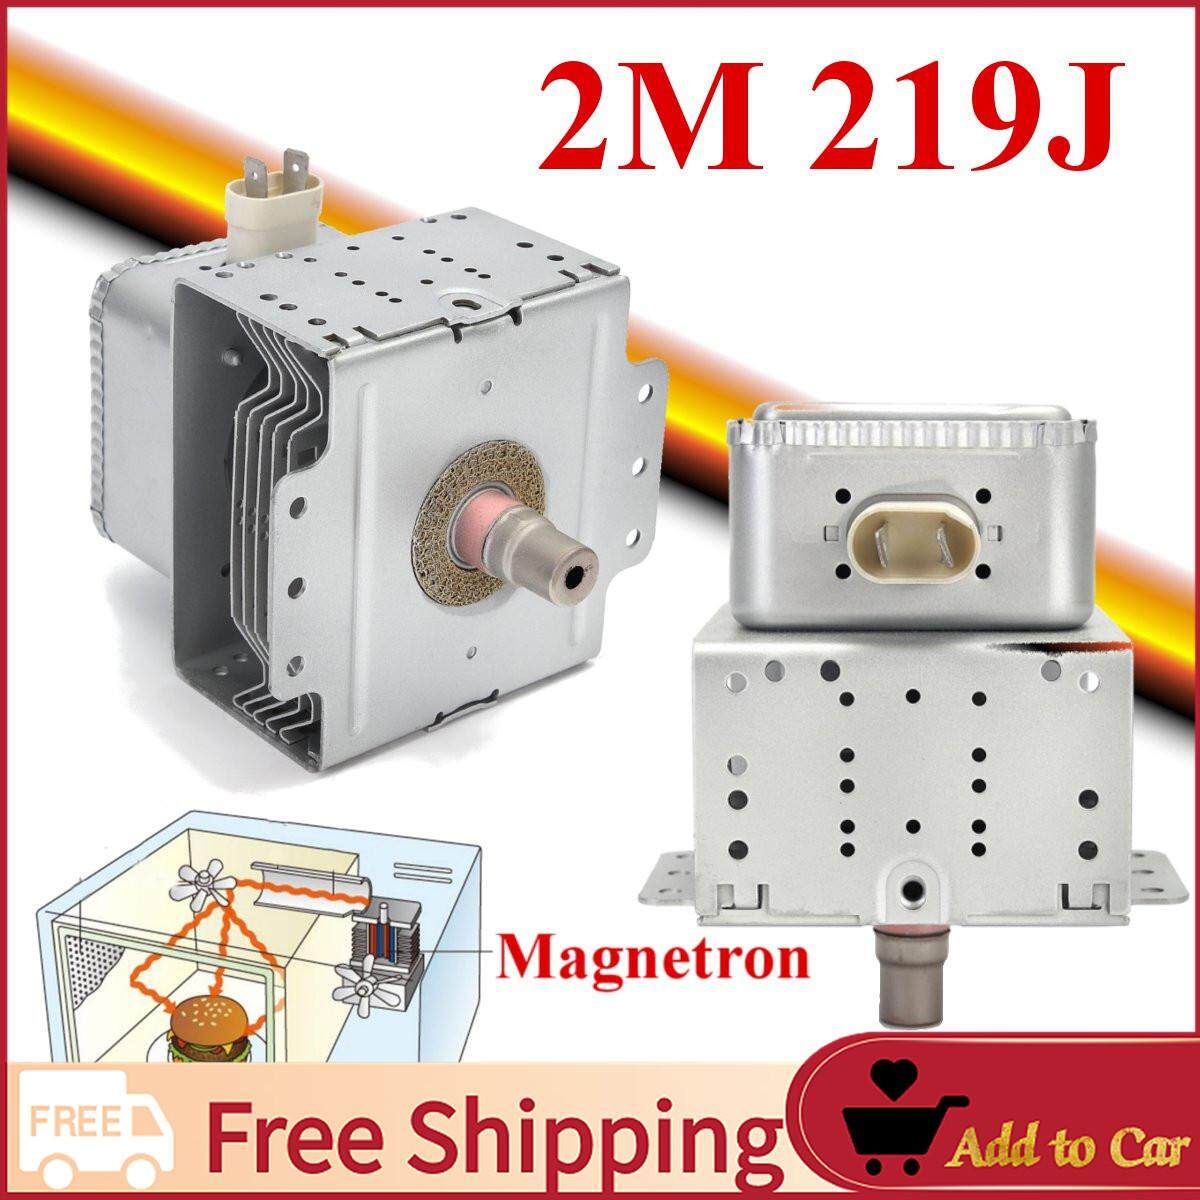 【Free Shipping】เตาอบไมโครเวฟ Roaster Magnetron อะไหล่สำหรับ Midea WITOL-2M 219J - INTL